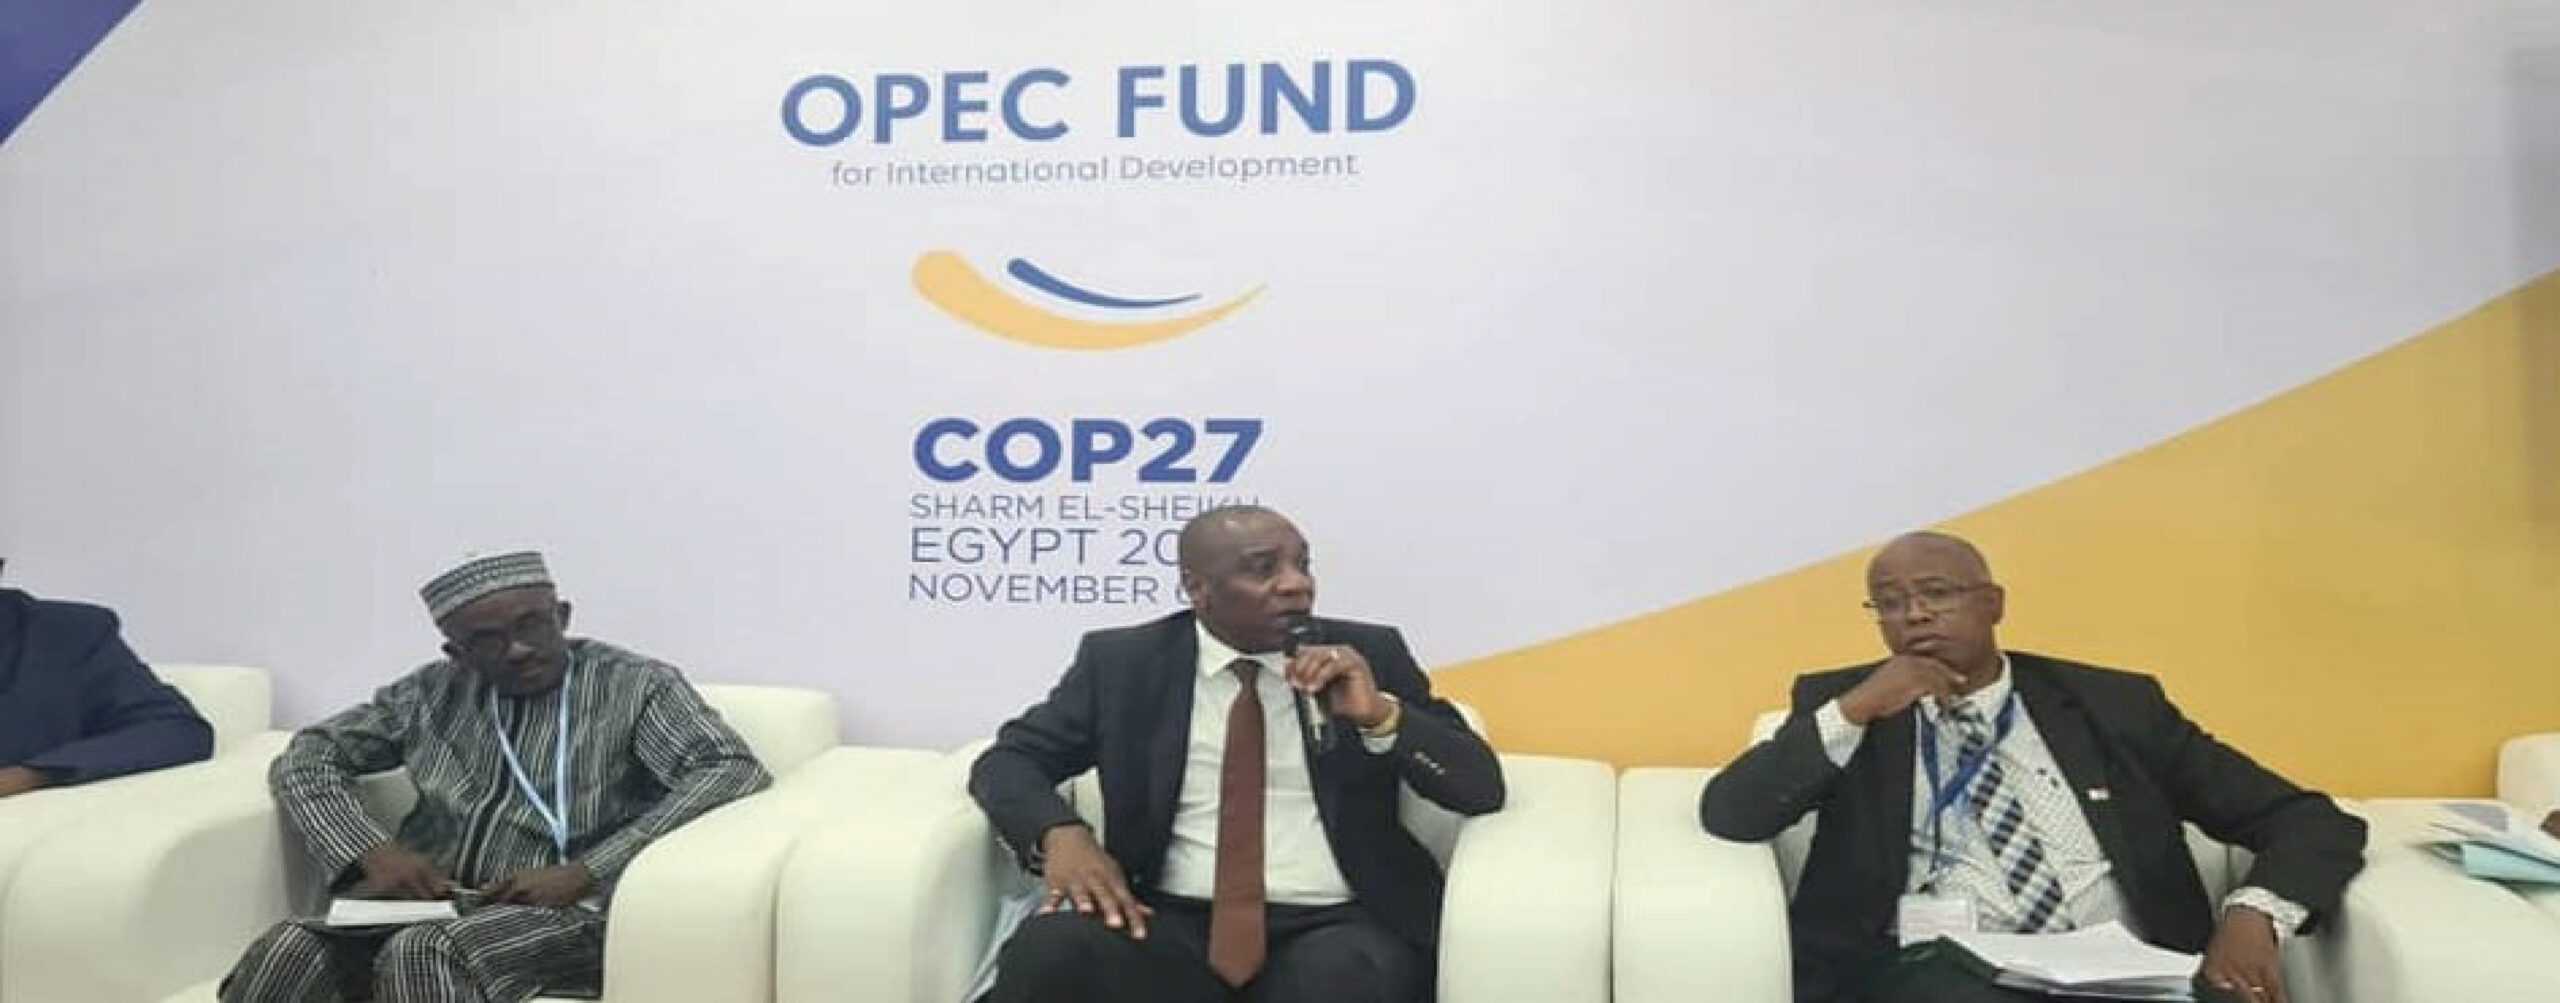 Côte d'Ivoire - OPEC Fund for International Development